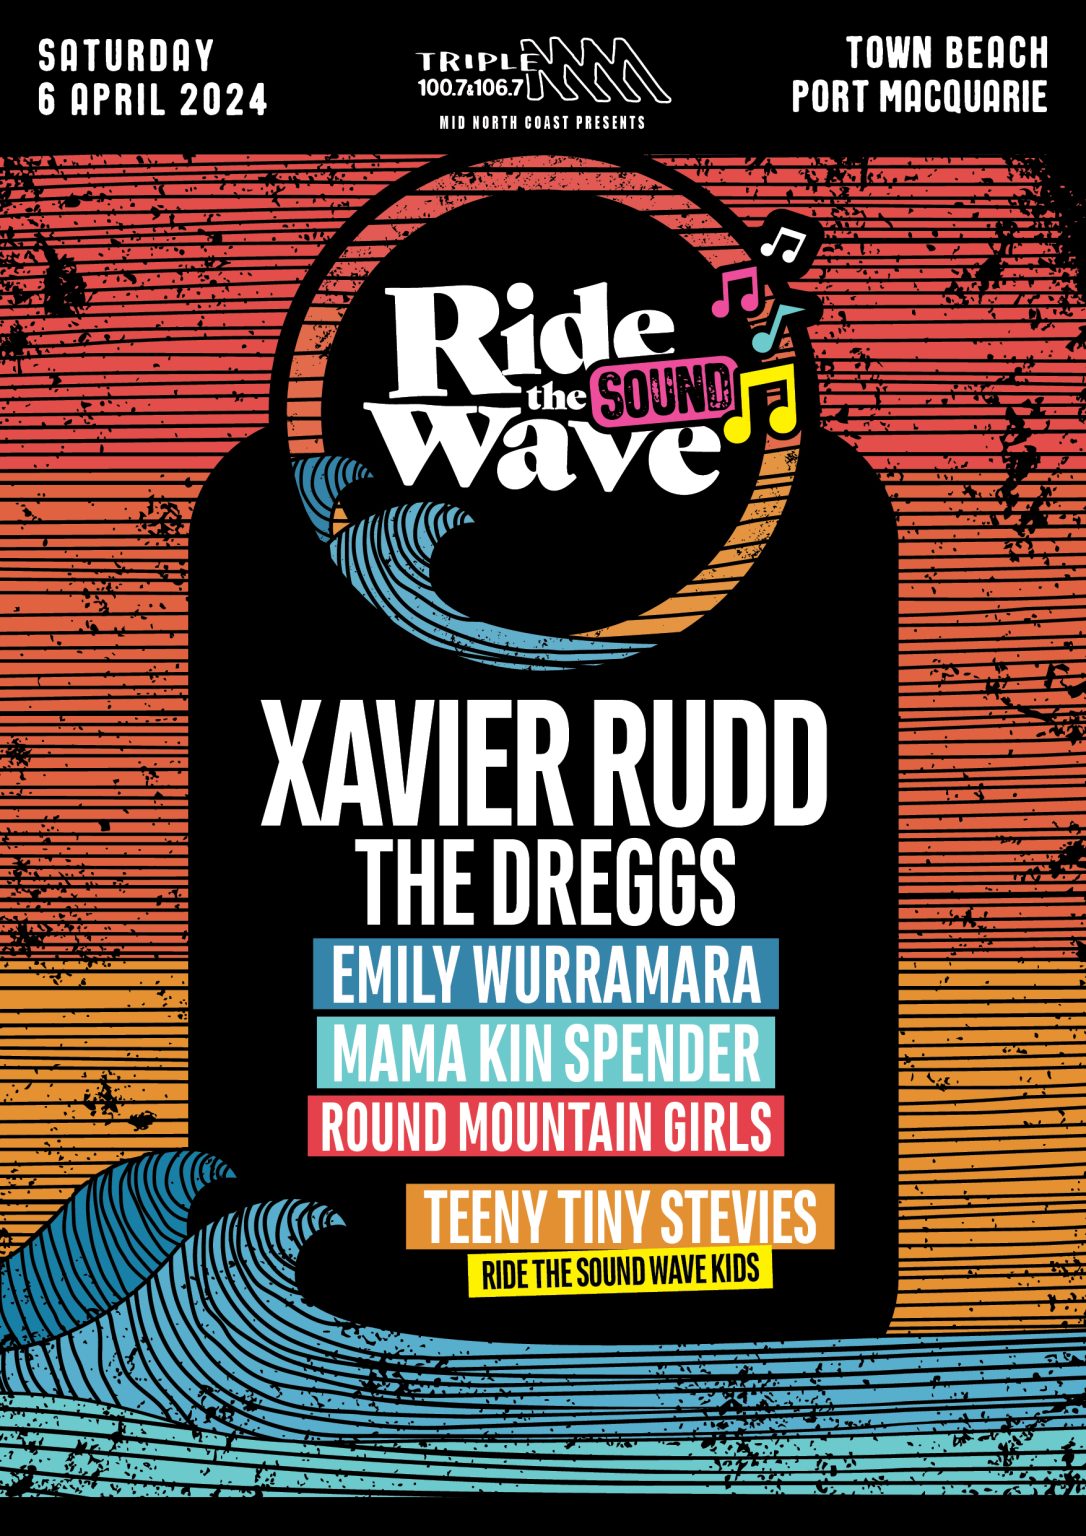 Ride the Soundwave lineup announcement